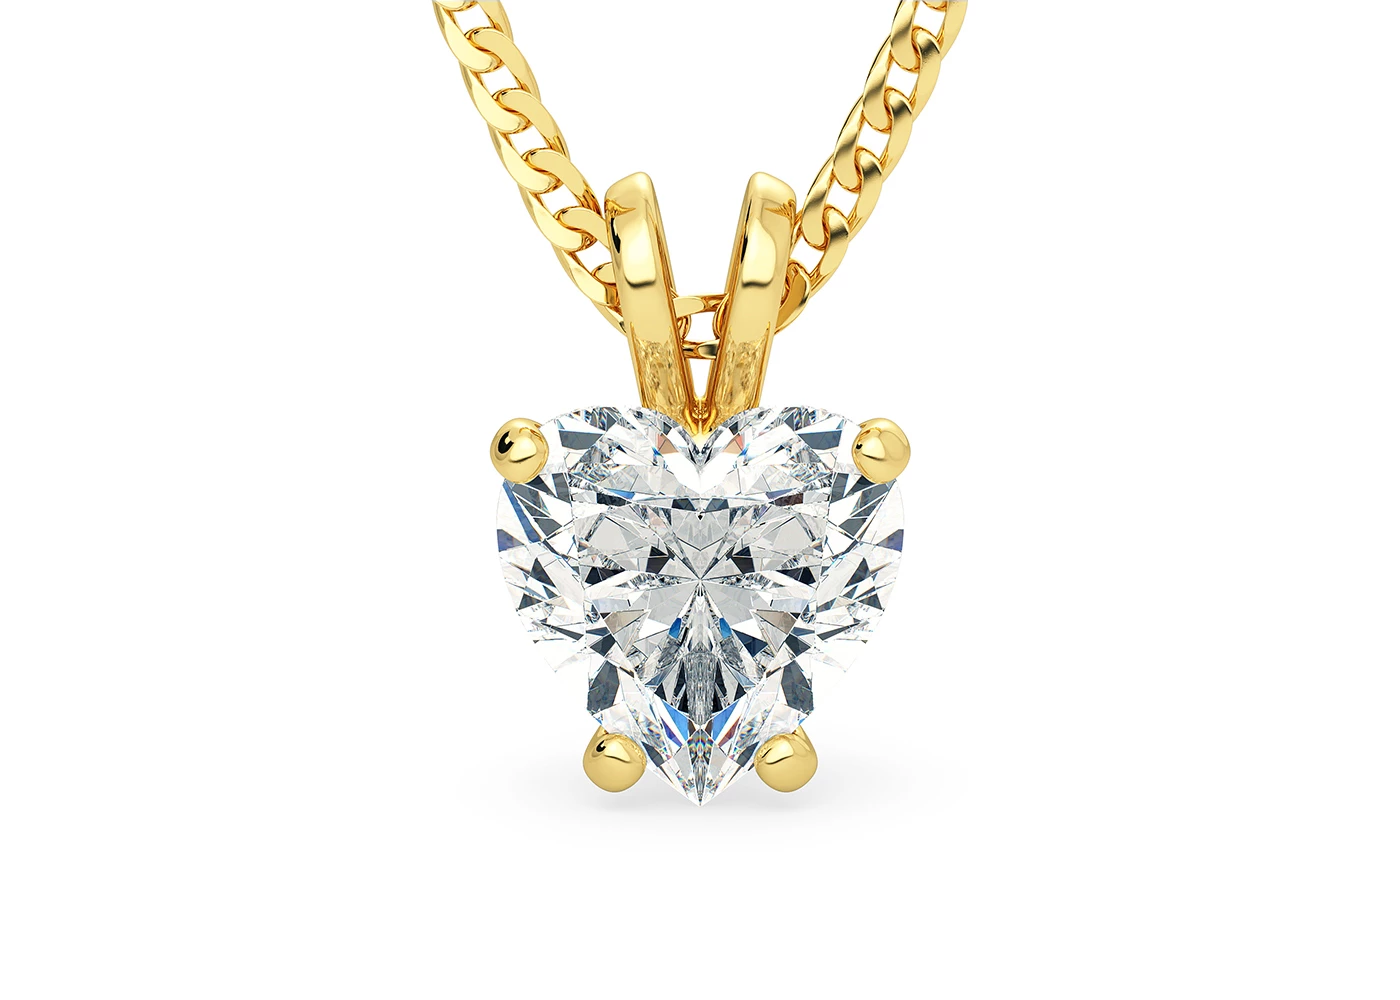 Two Carat Heart Diamond Pendant in 18K Yellow Gold